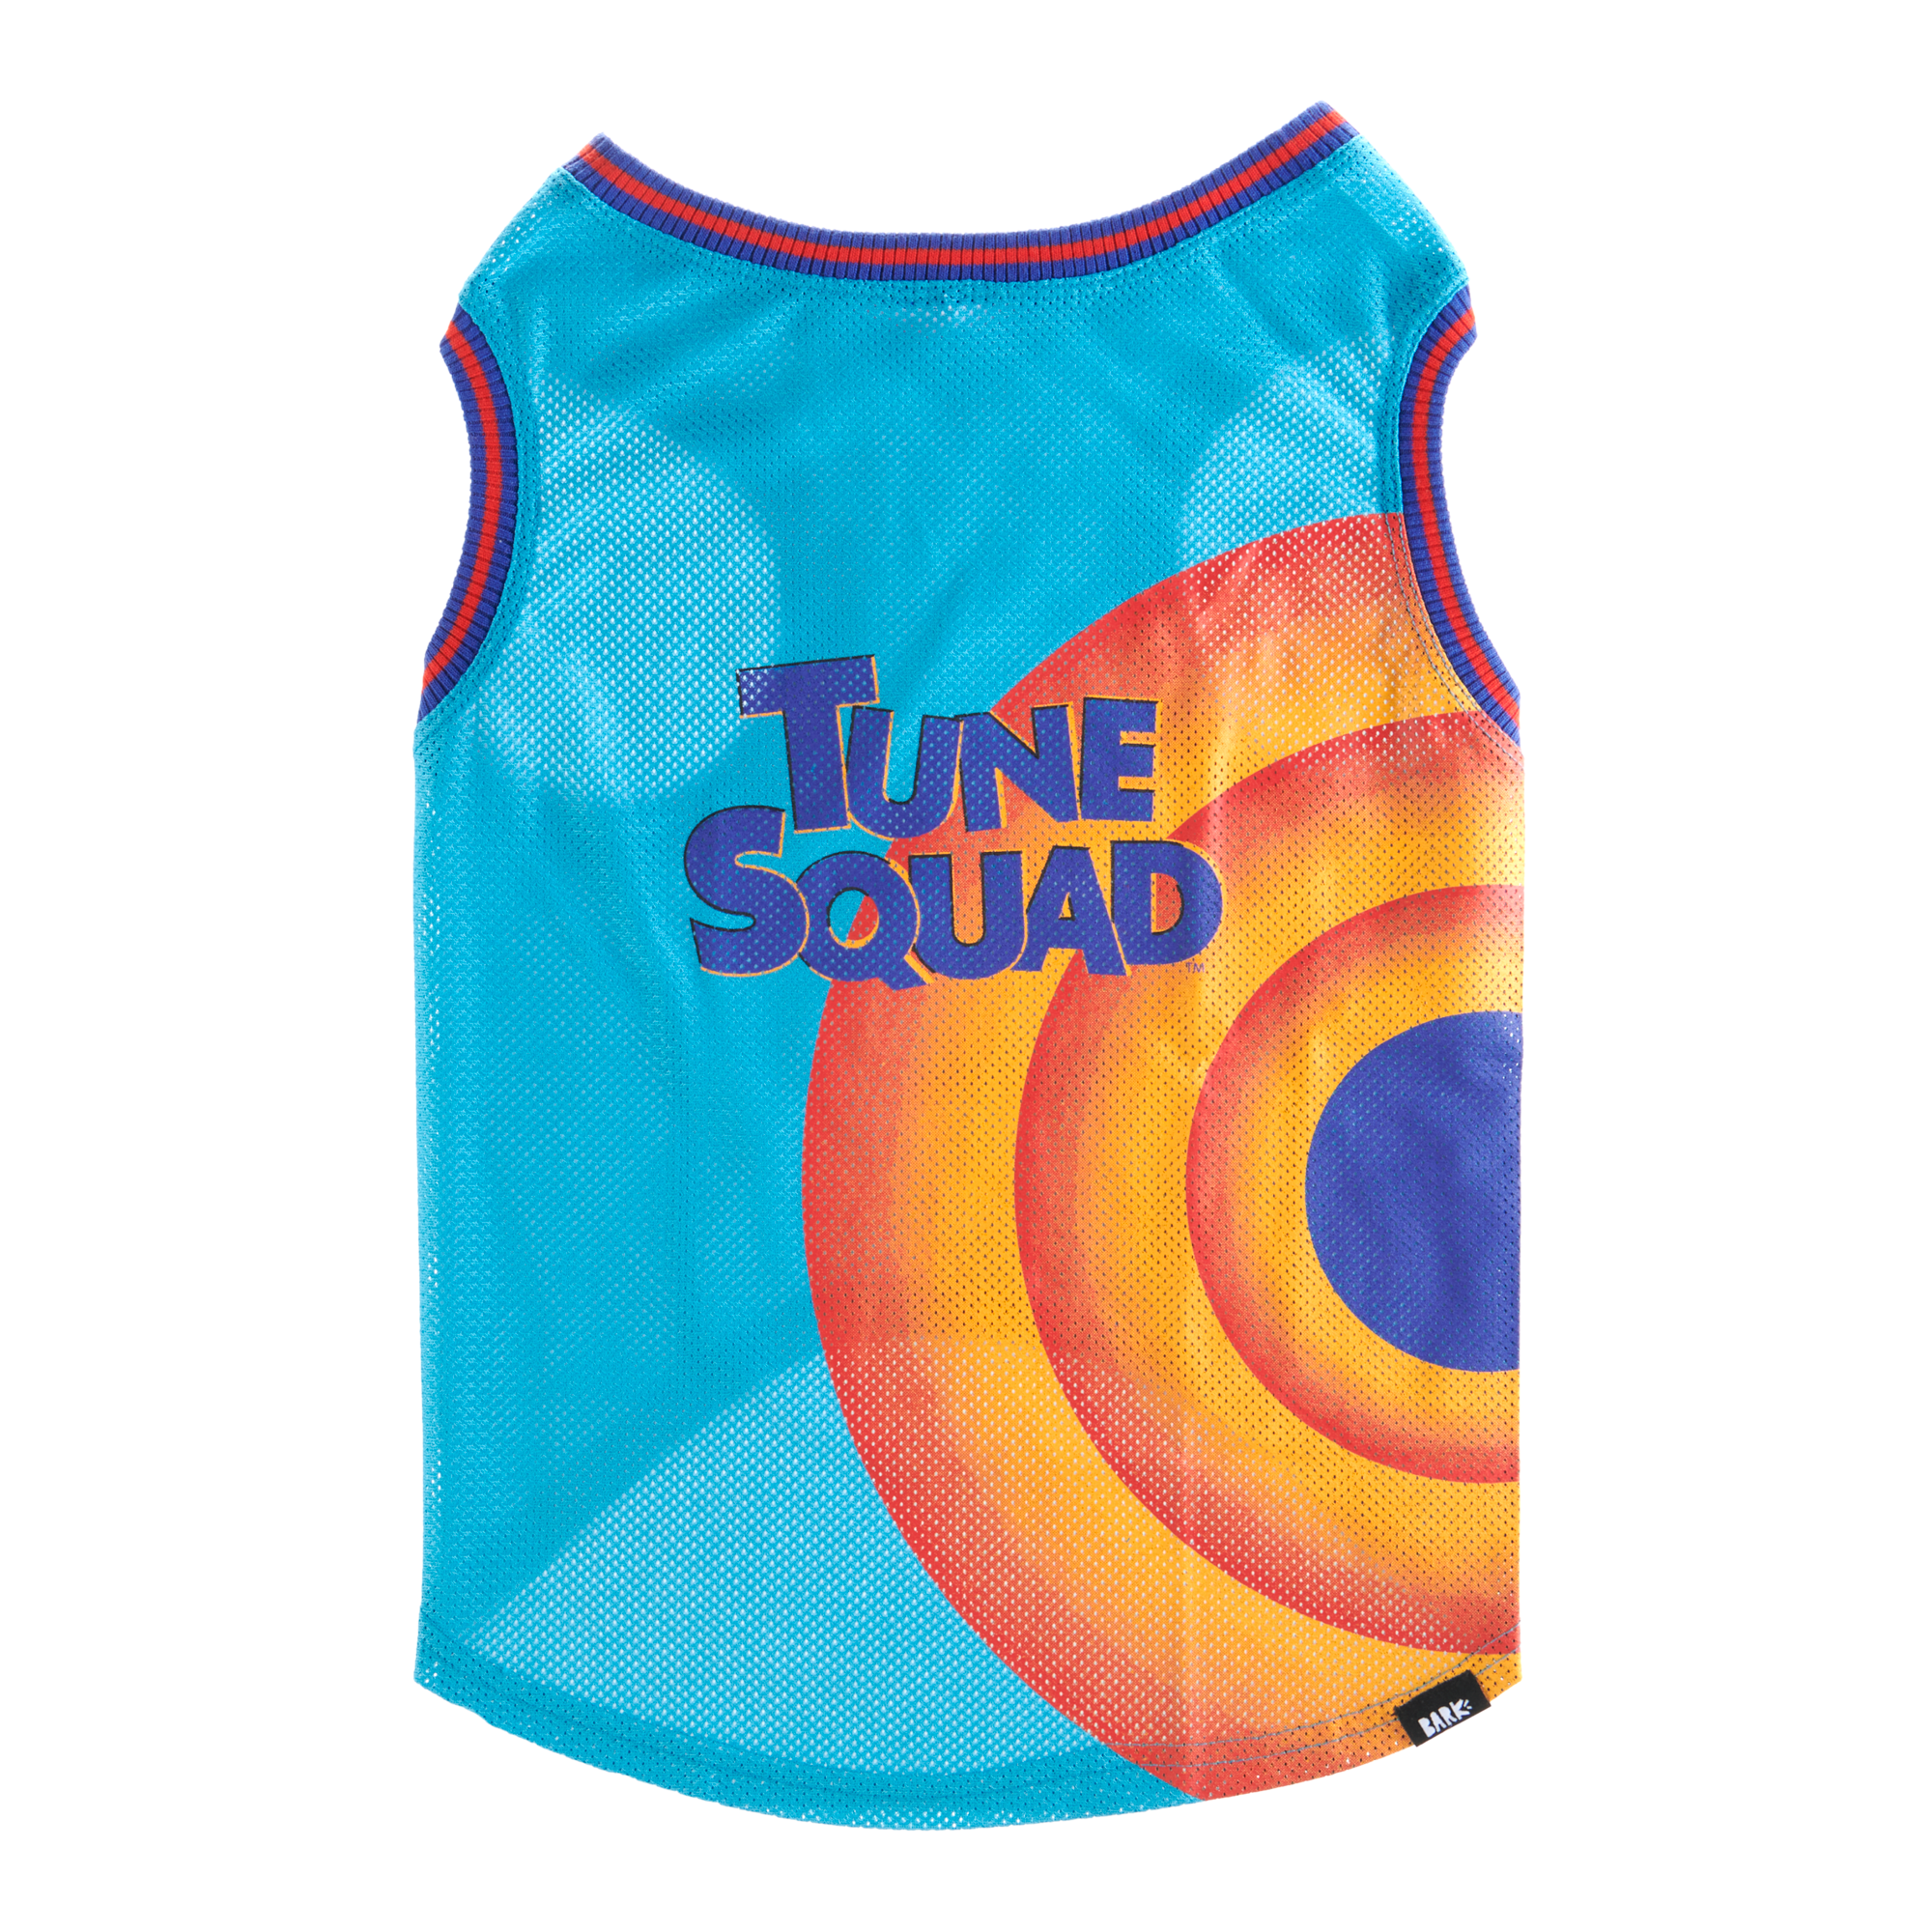 MyPartyShirt Bugs Bunny Tune Squad Jersey Space Jam Basketball Movie Uniform Costume Black 1